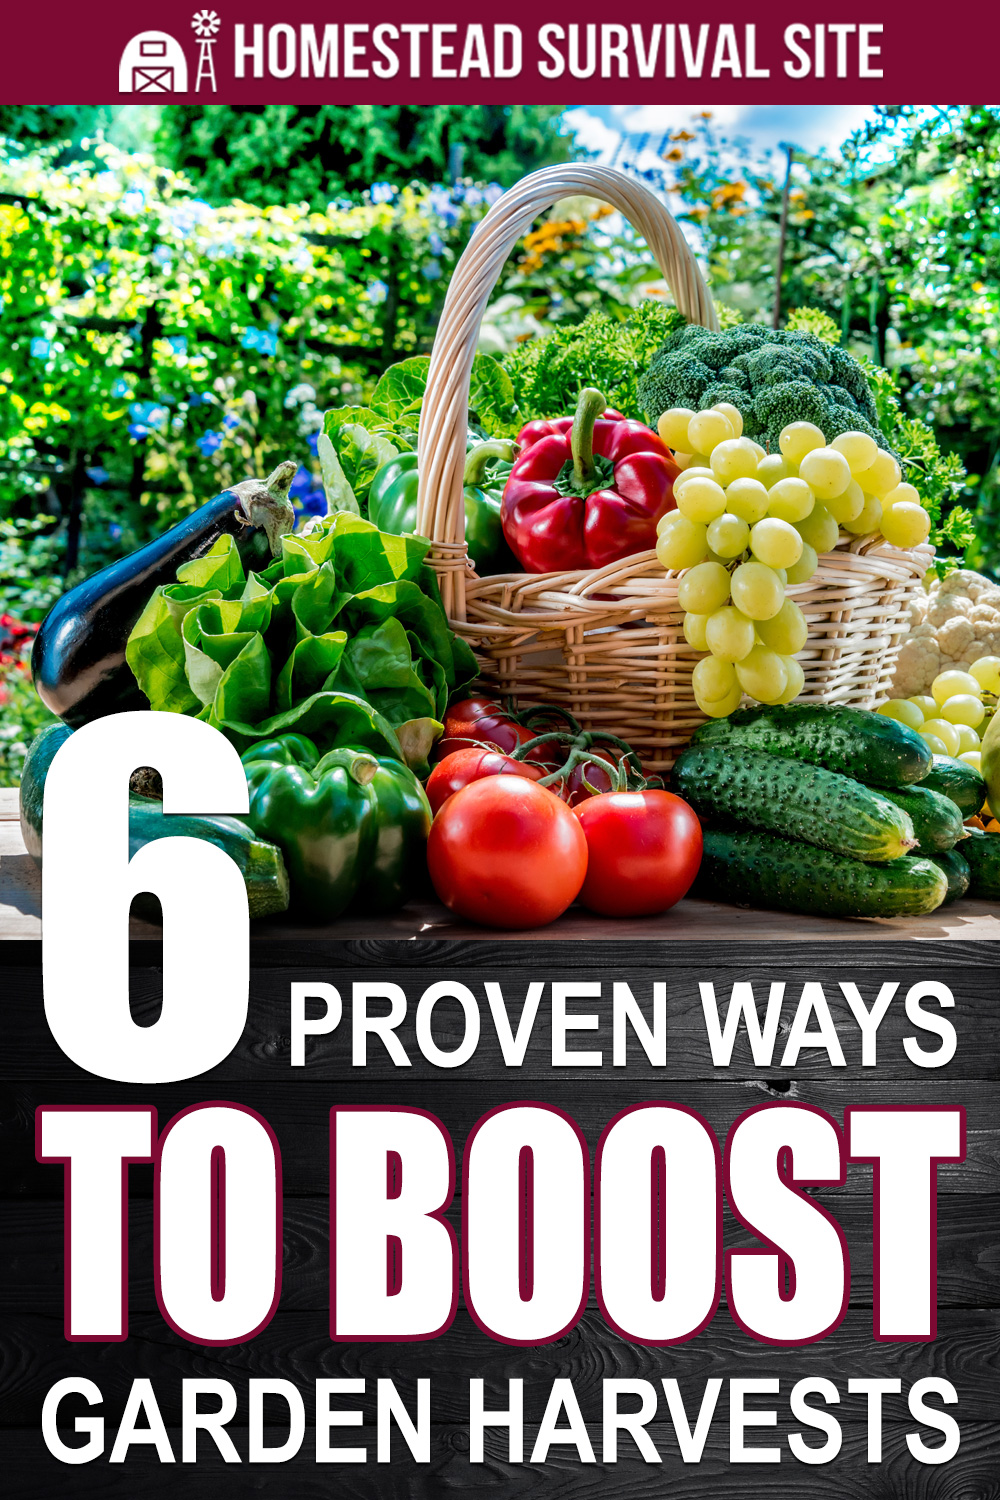 6 Proven Ways to Boost Garden Harvests